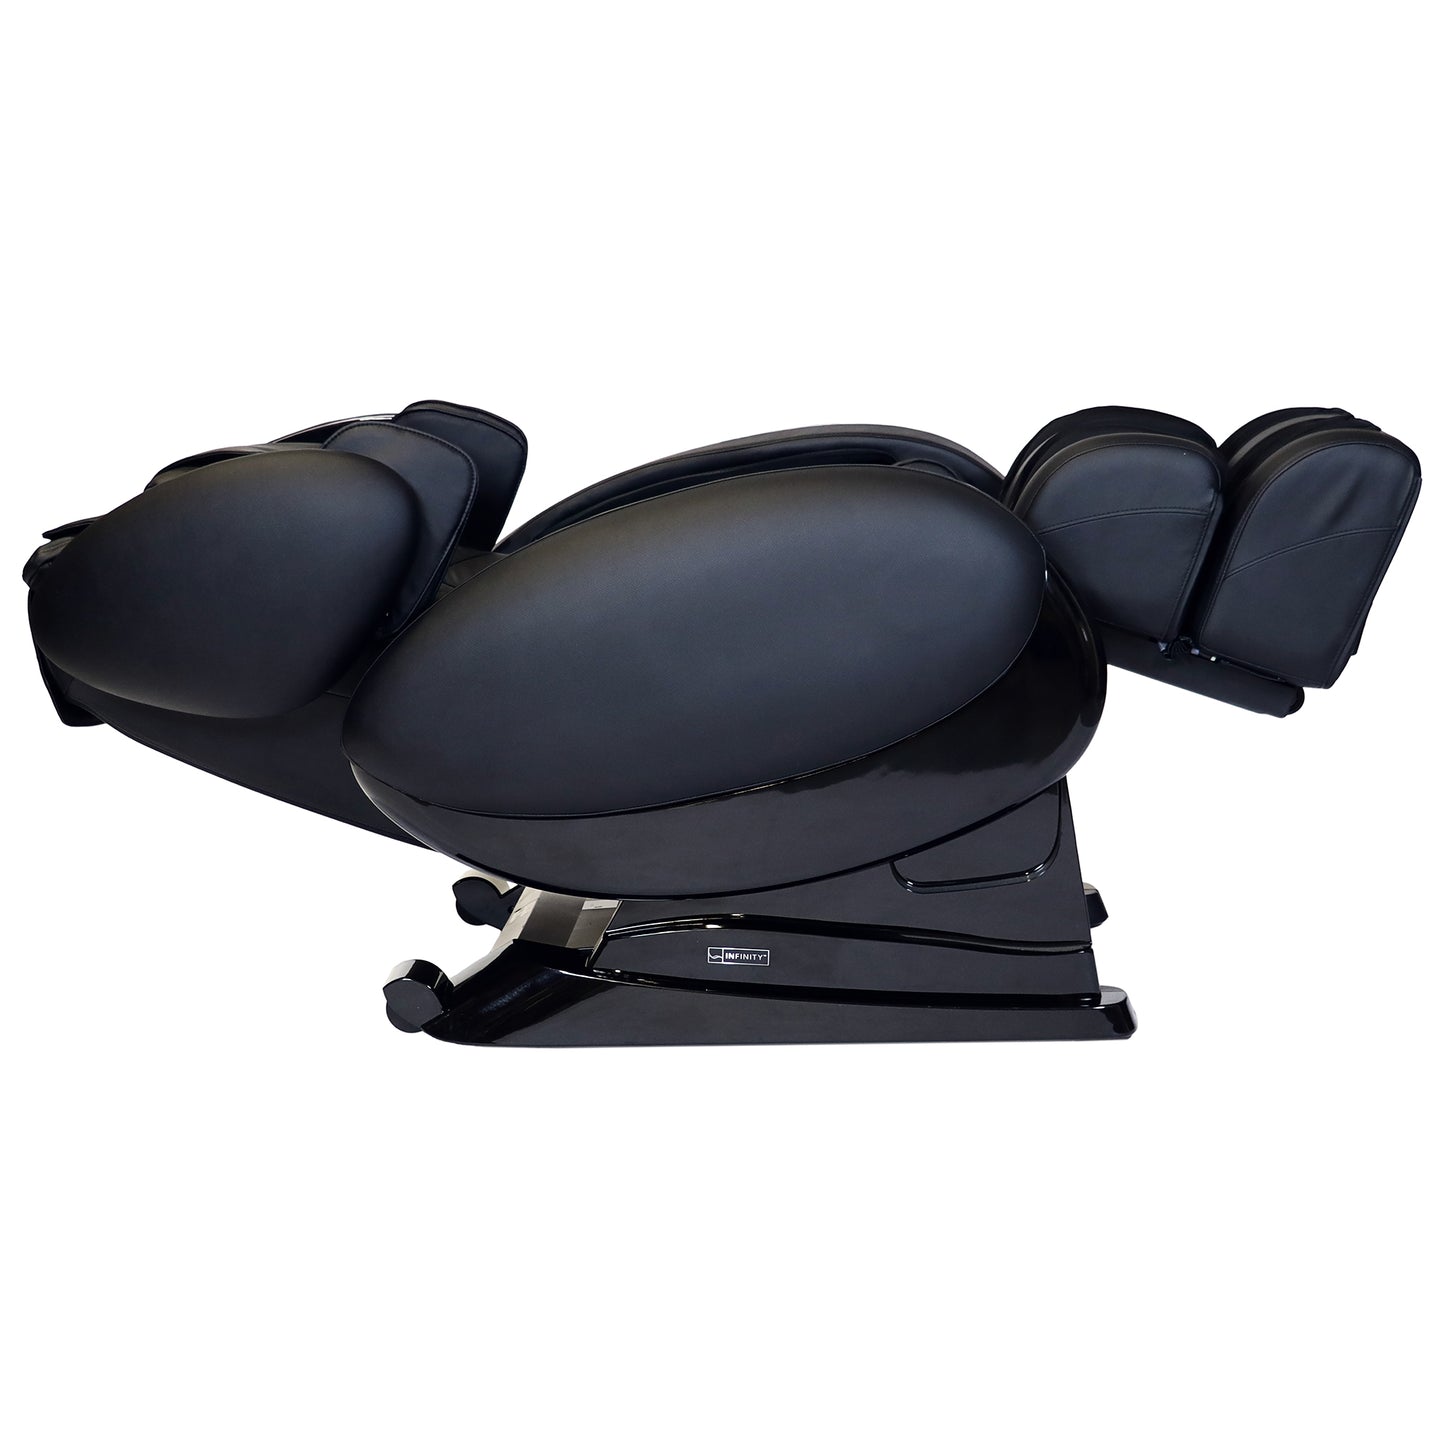 Infinity IT-8500™ Plus Massage Chair